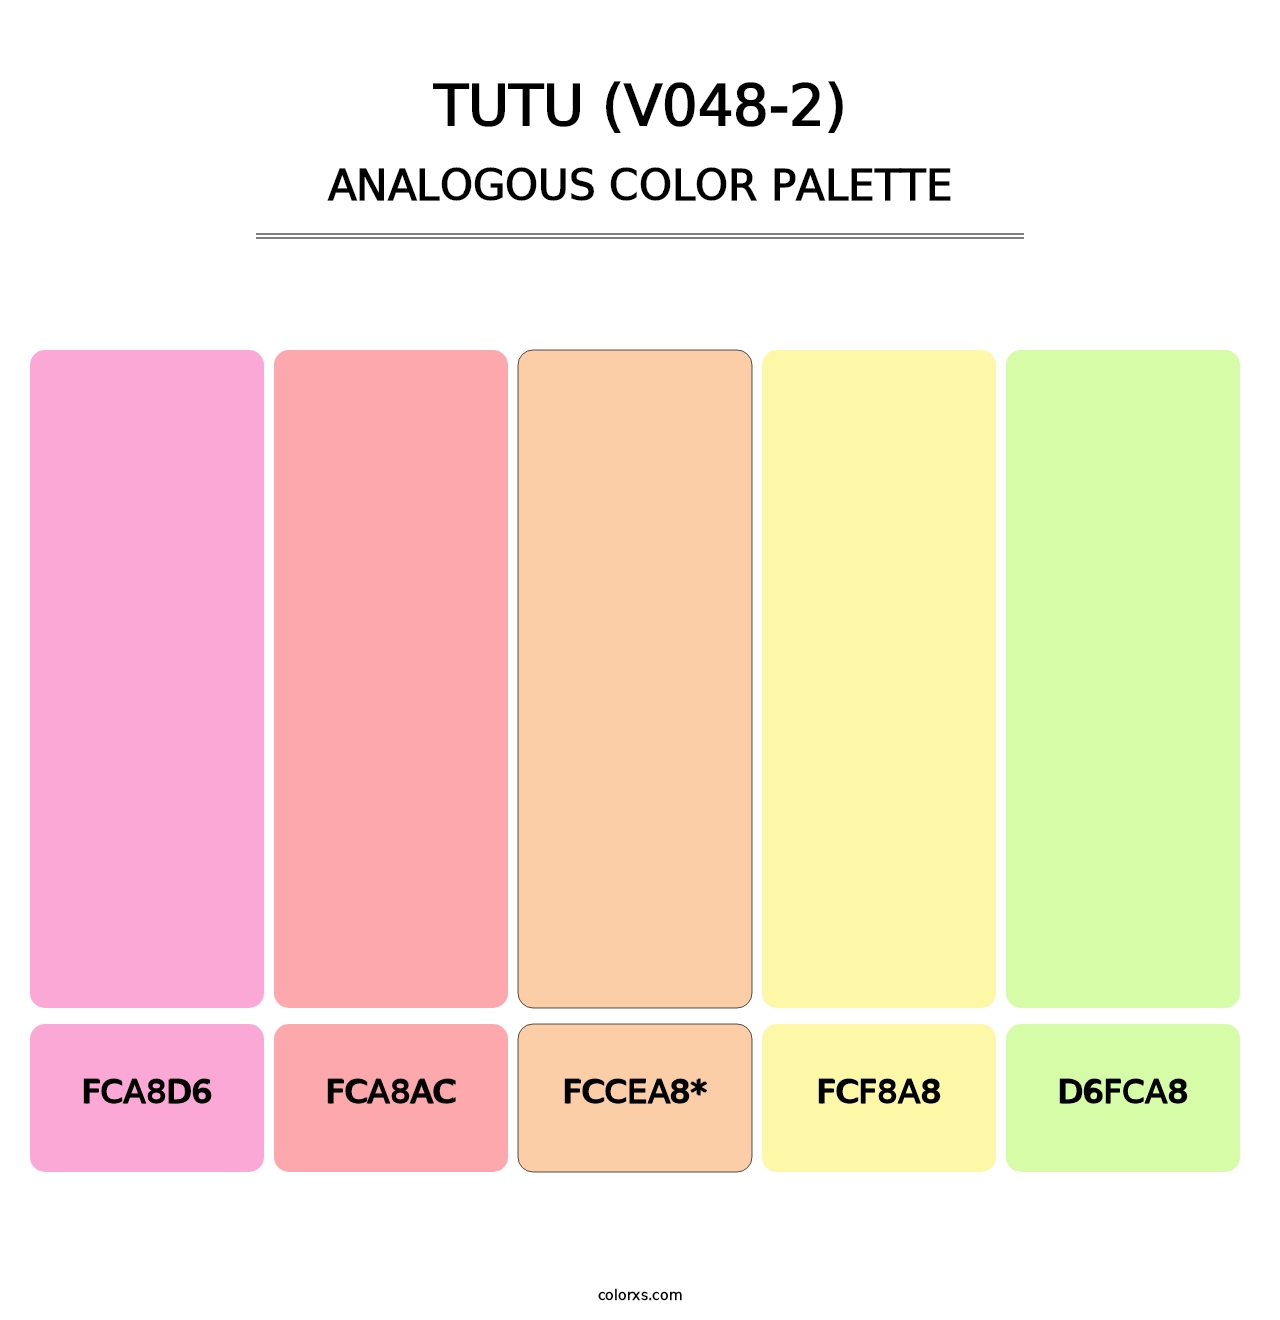 Tutu (V048-2) - Analogous Color Palette